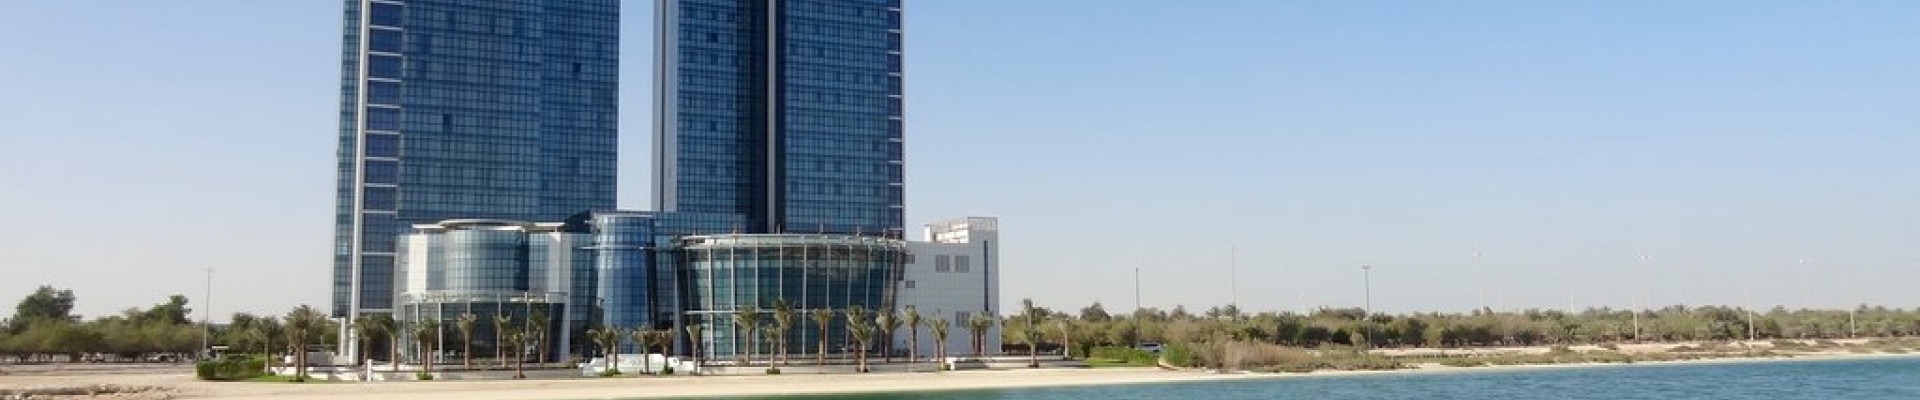 3* Ibis Abu Dhabi Gate Hotel - Abu Dhabi Package (5 Nights)